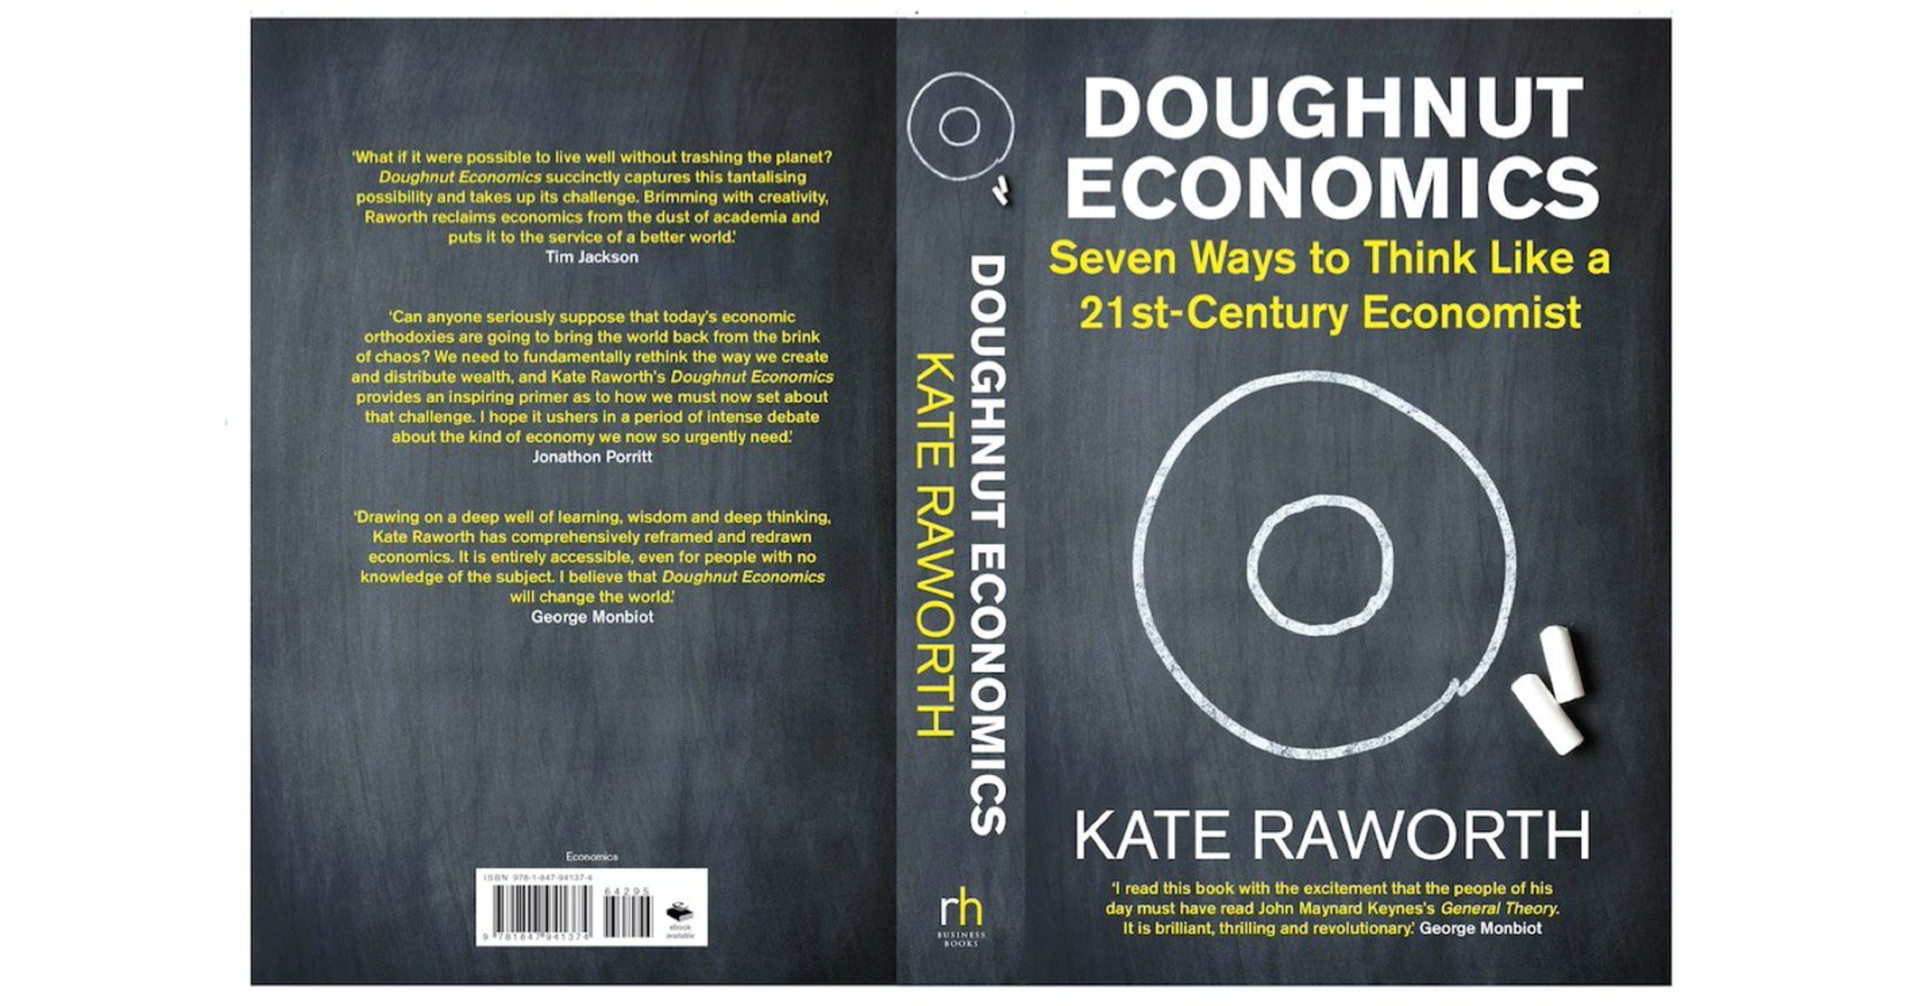 Doughnut Economics book cover